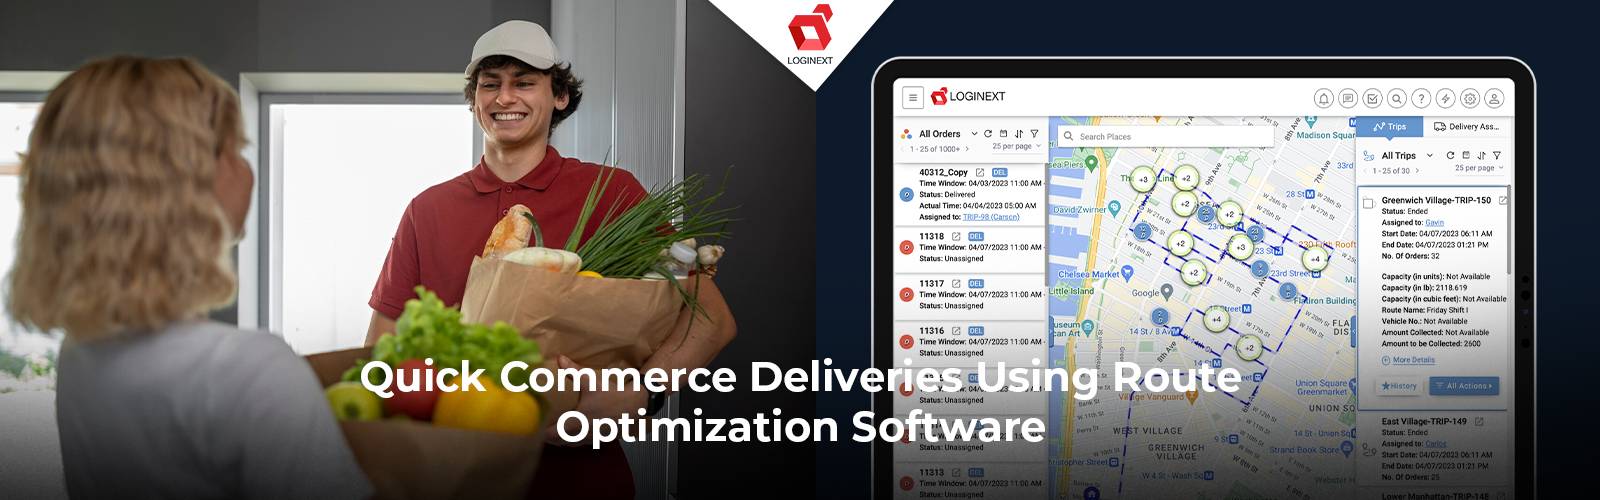 Best route optimization solution for Quick Commerce Deliveries